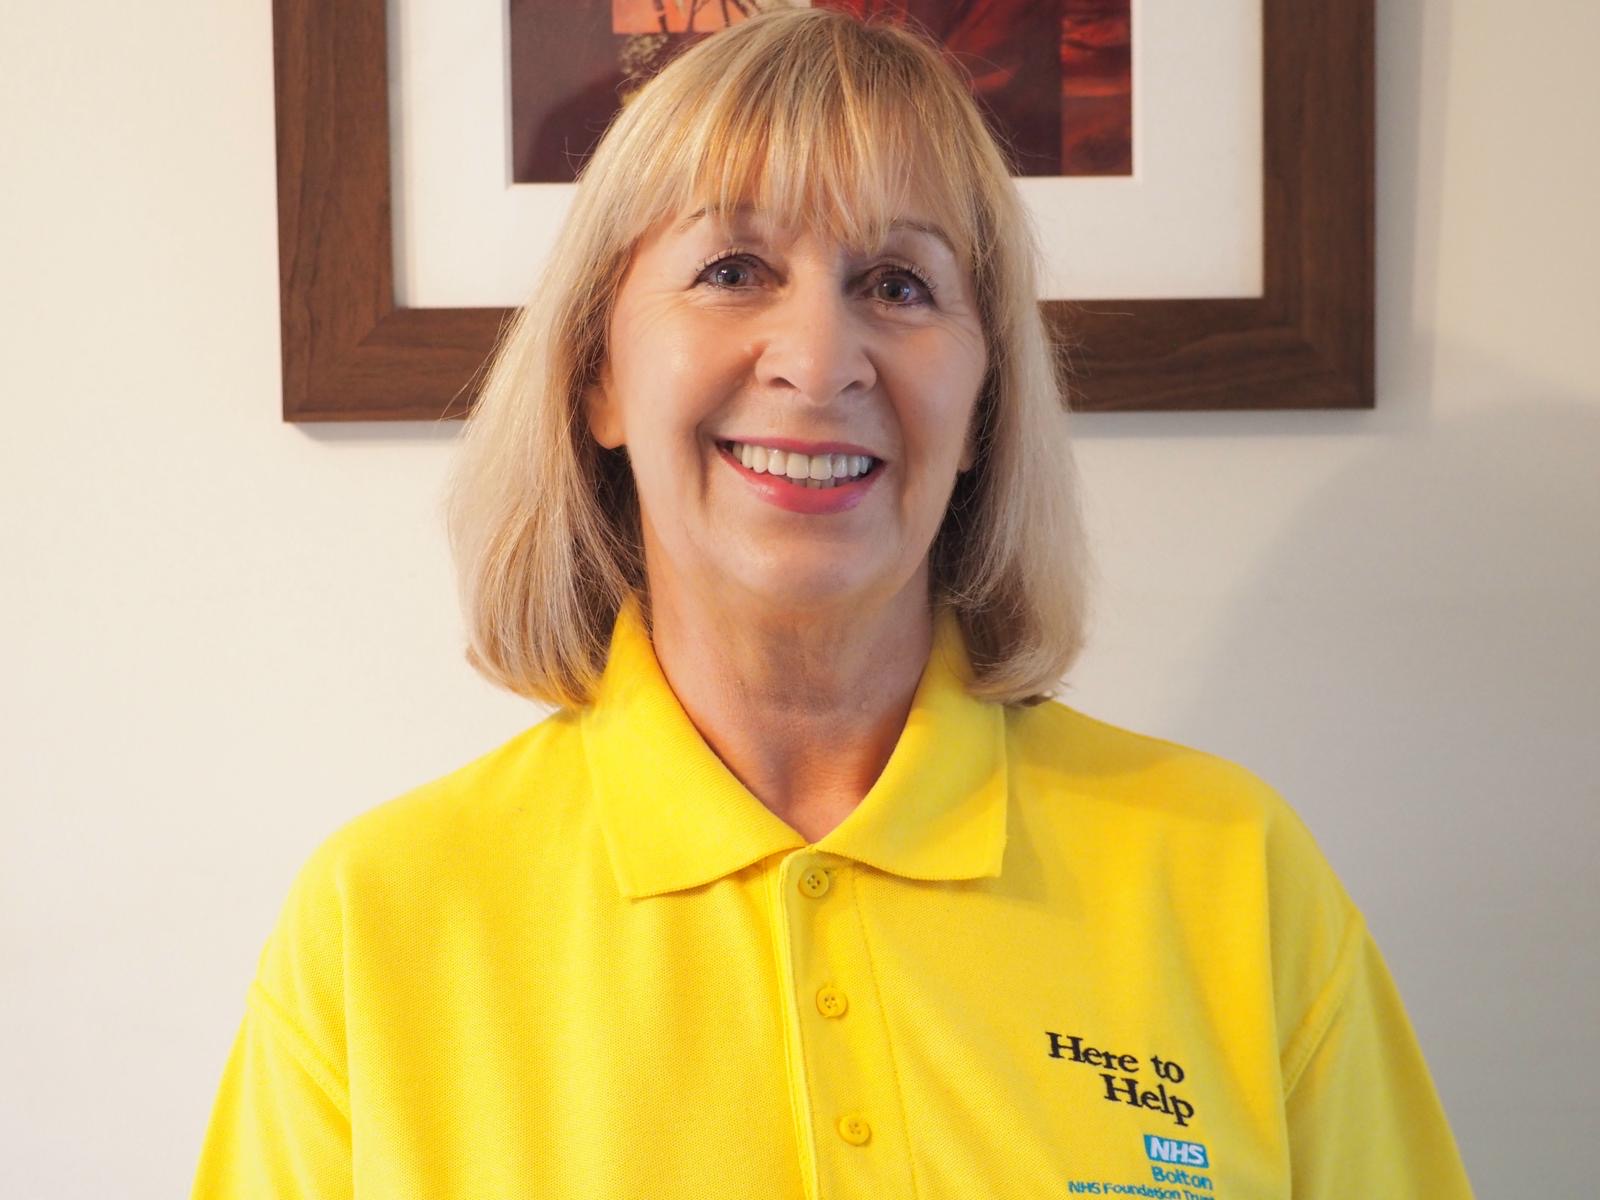 Volunteer Stephanie Egan wears a bright yellow tshirt